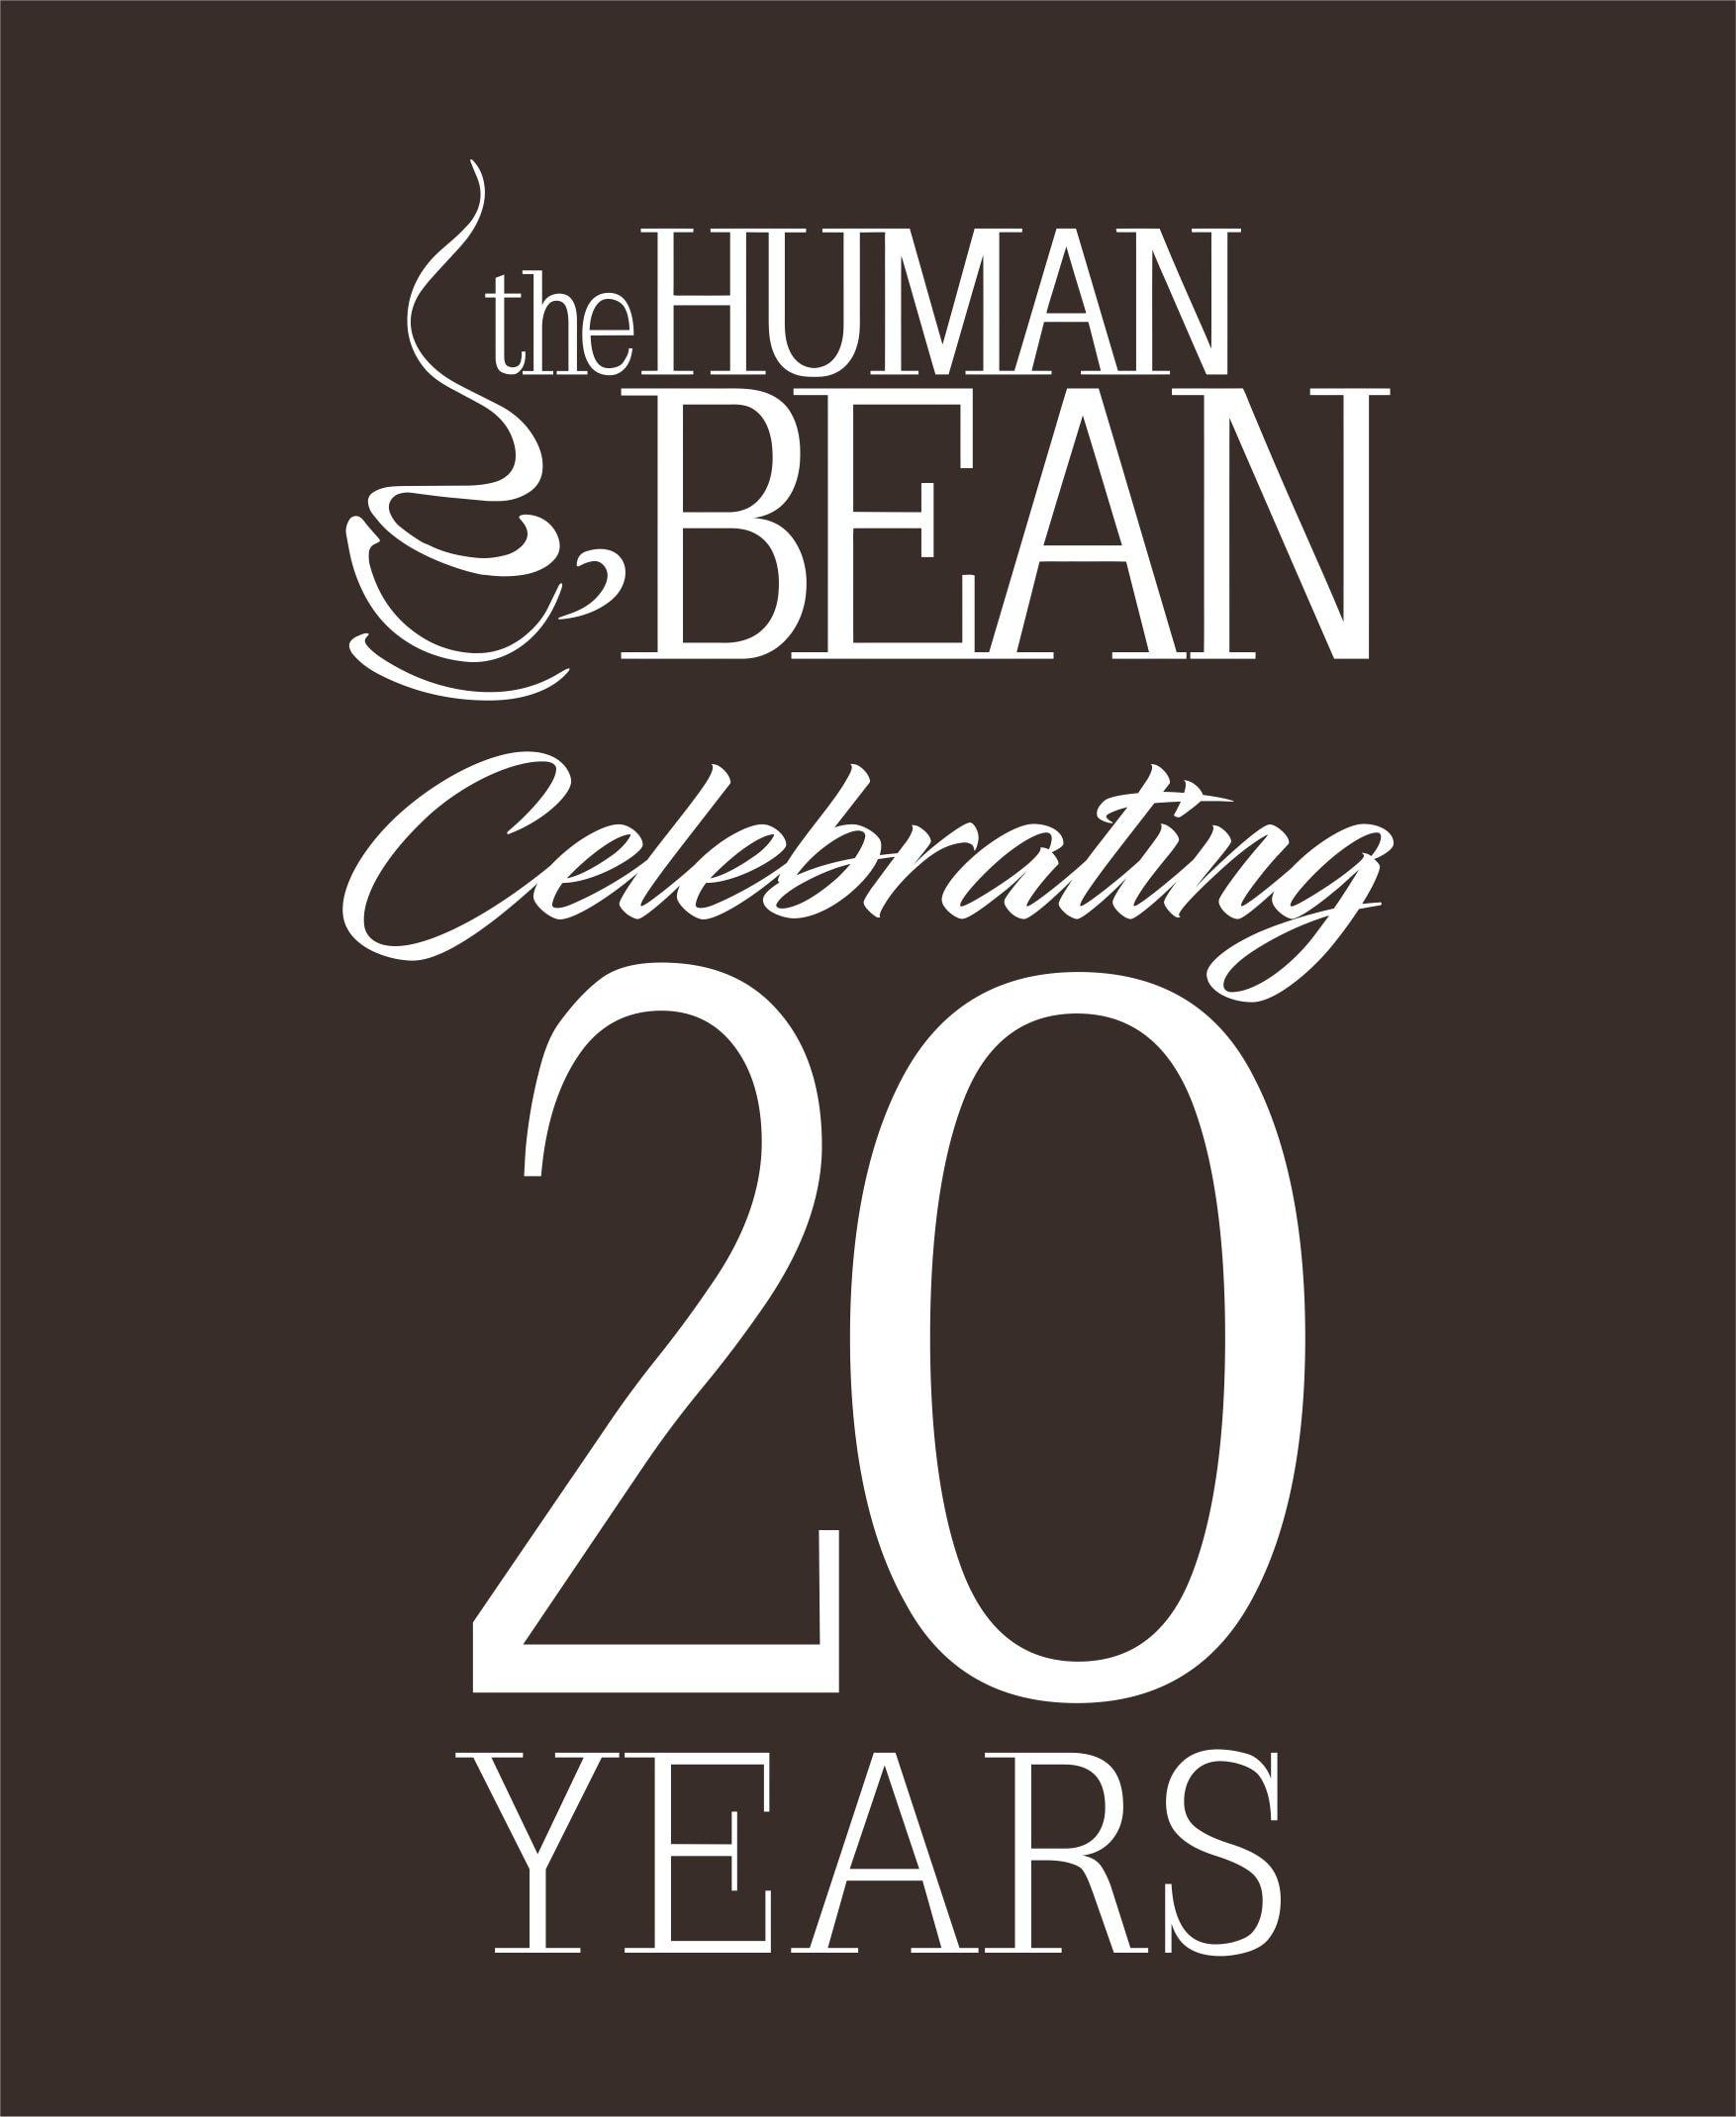 The Human Bean Company Logo - Human Bean Drive Thru Franchise. About The Human Bean